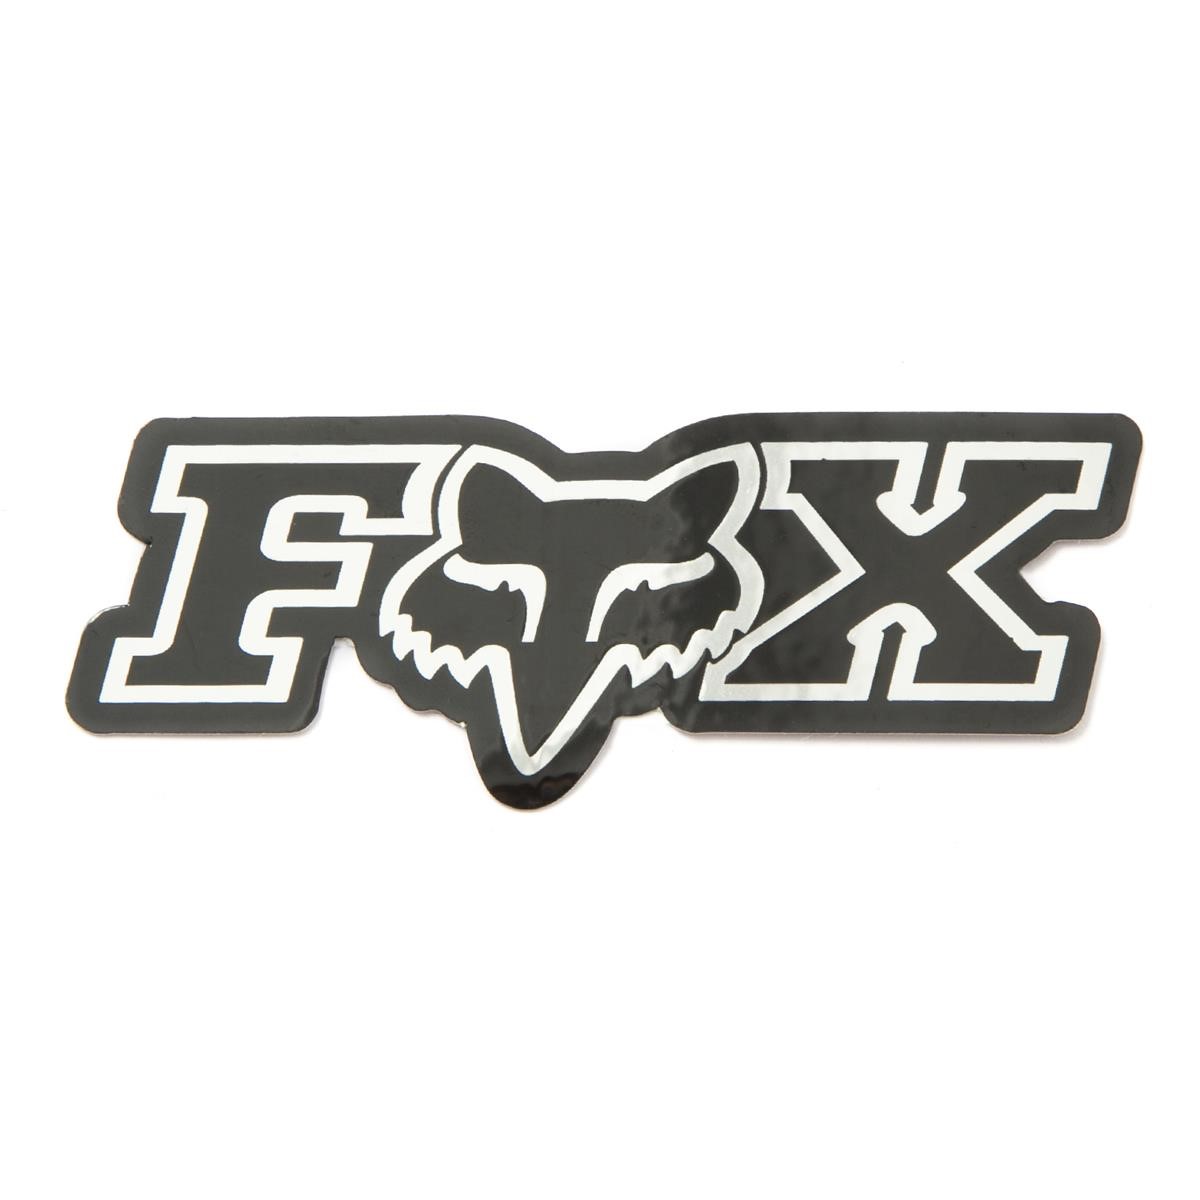 Fox Autocollant Corporate Chrome - 7.5 cm